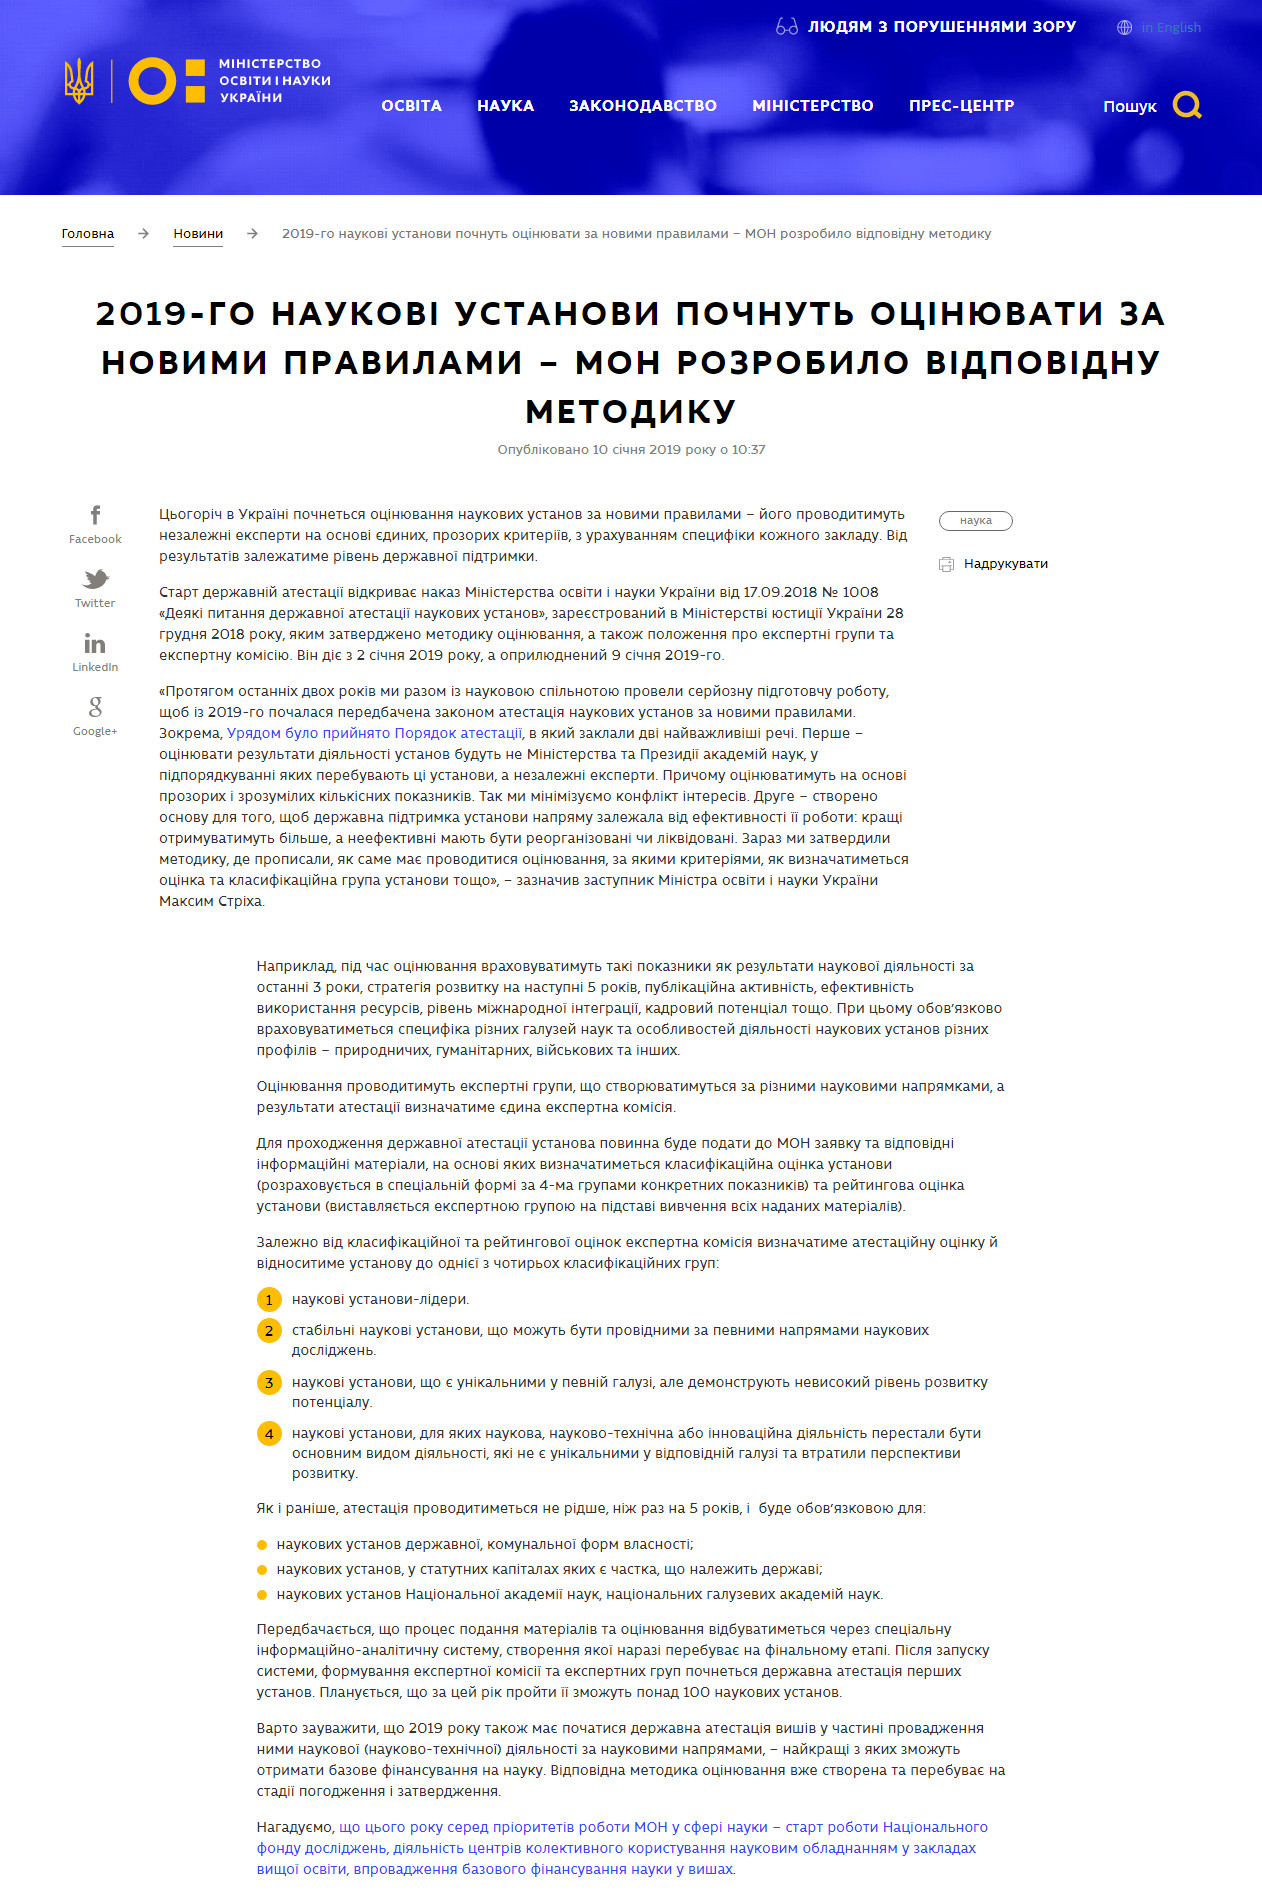 https://mon.gov.ua/ua/news/2019-go-naukovi-ustanovi-pochnut-ocinyuvati-za-novimi-pravilami-mon-rozrobilo-vidpovidnu-metodiku